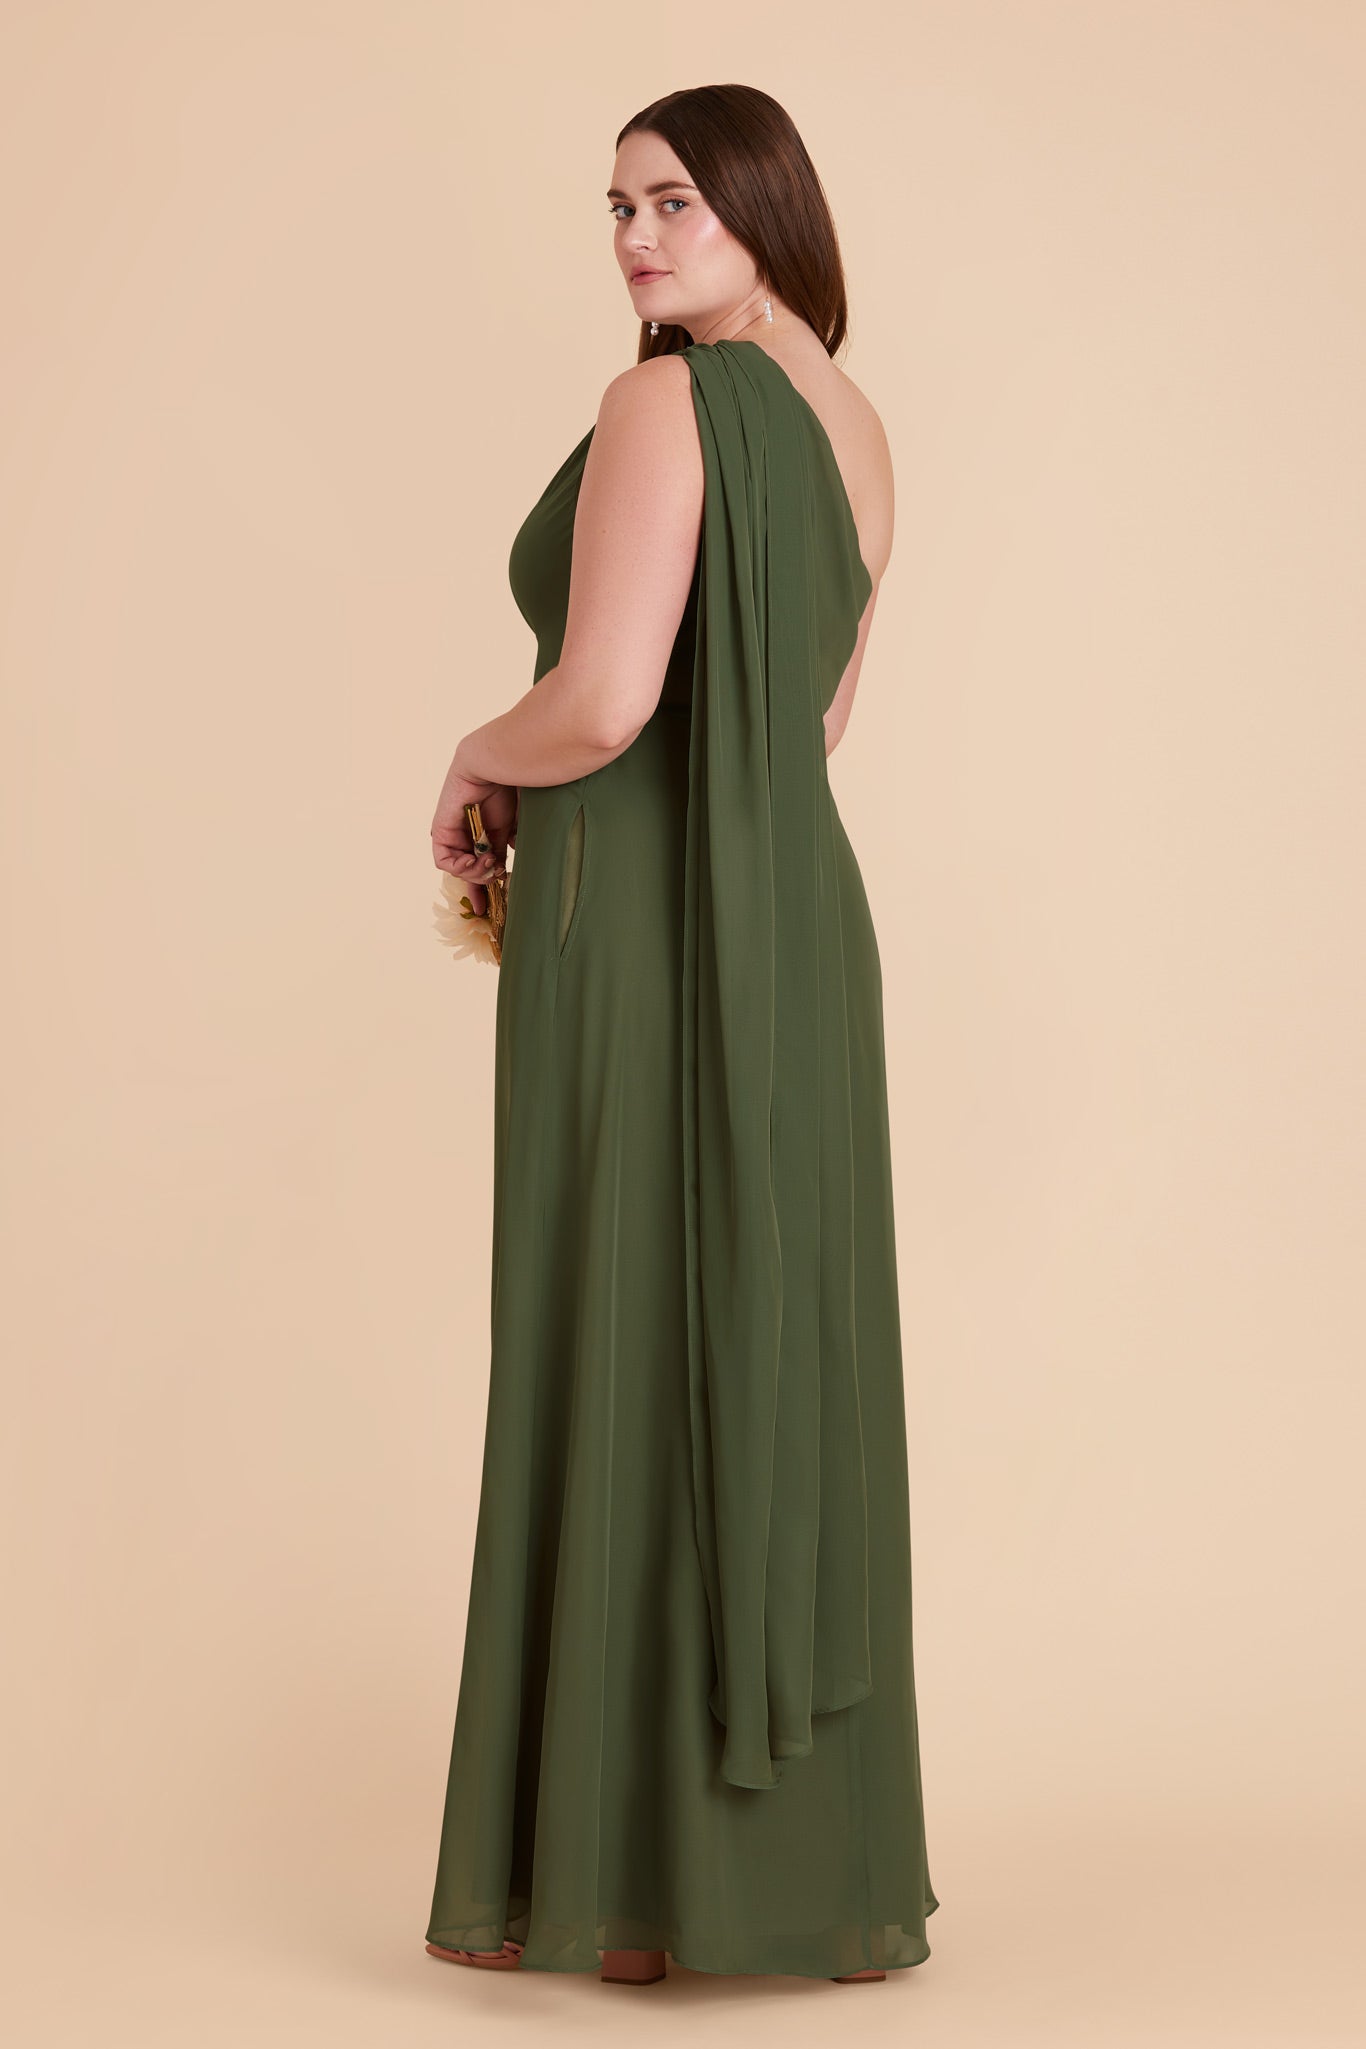 Olive Melissa Chiffon Dress by Birdy Grey